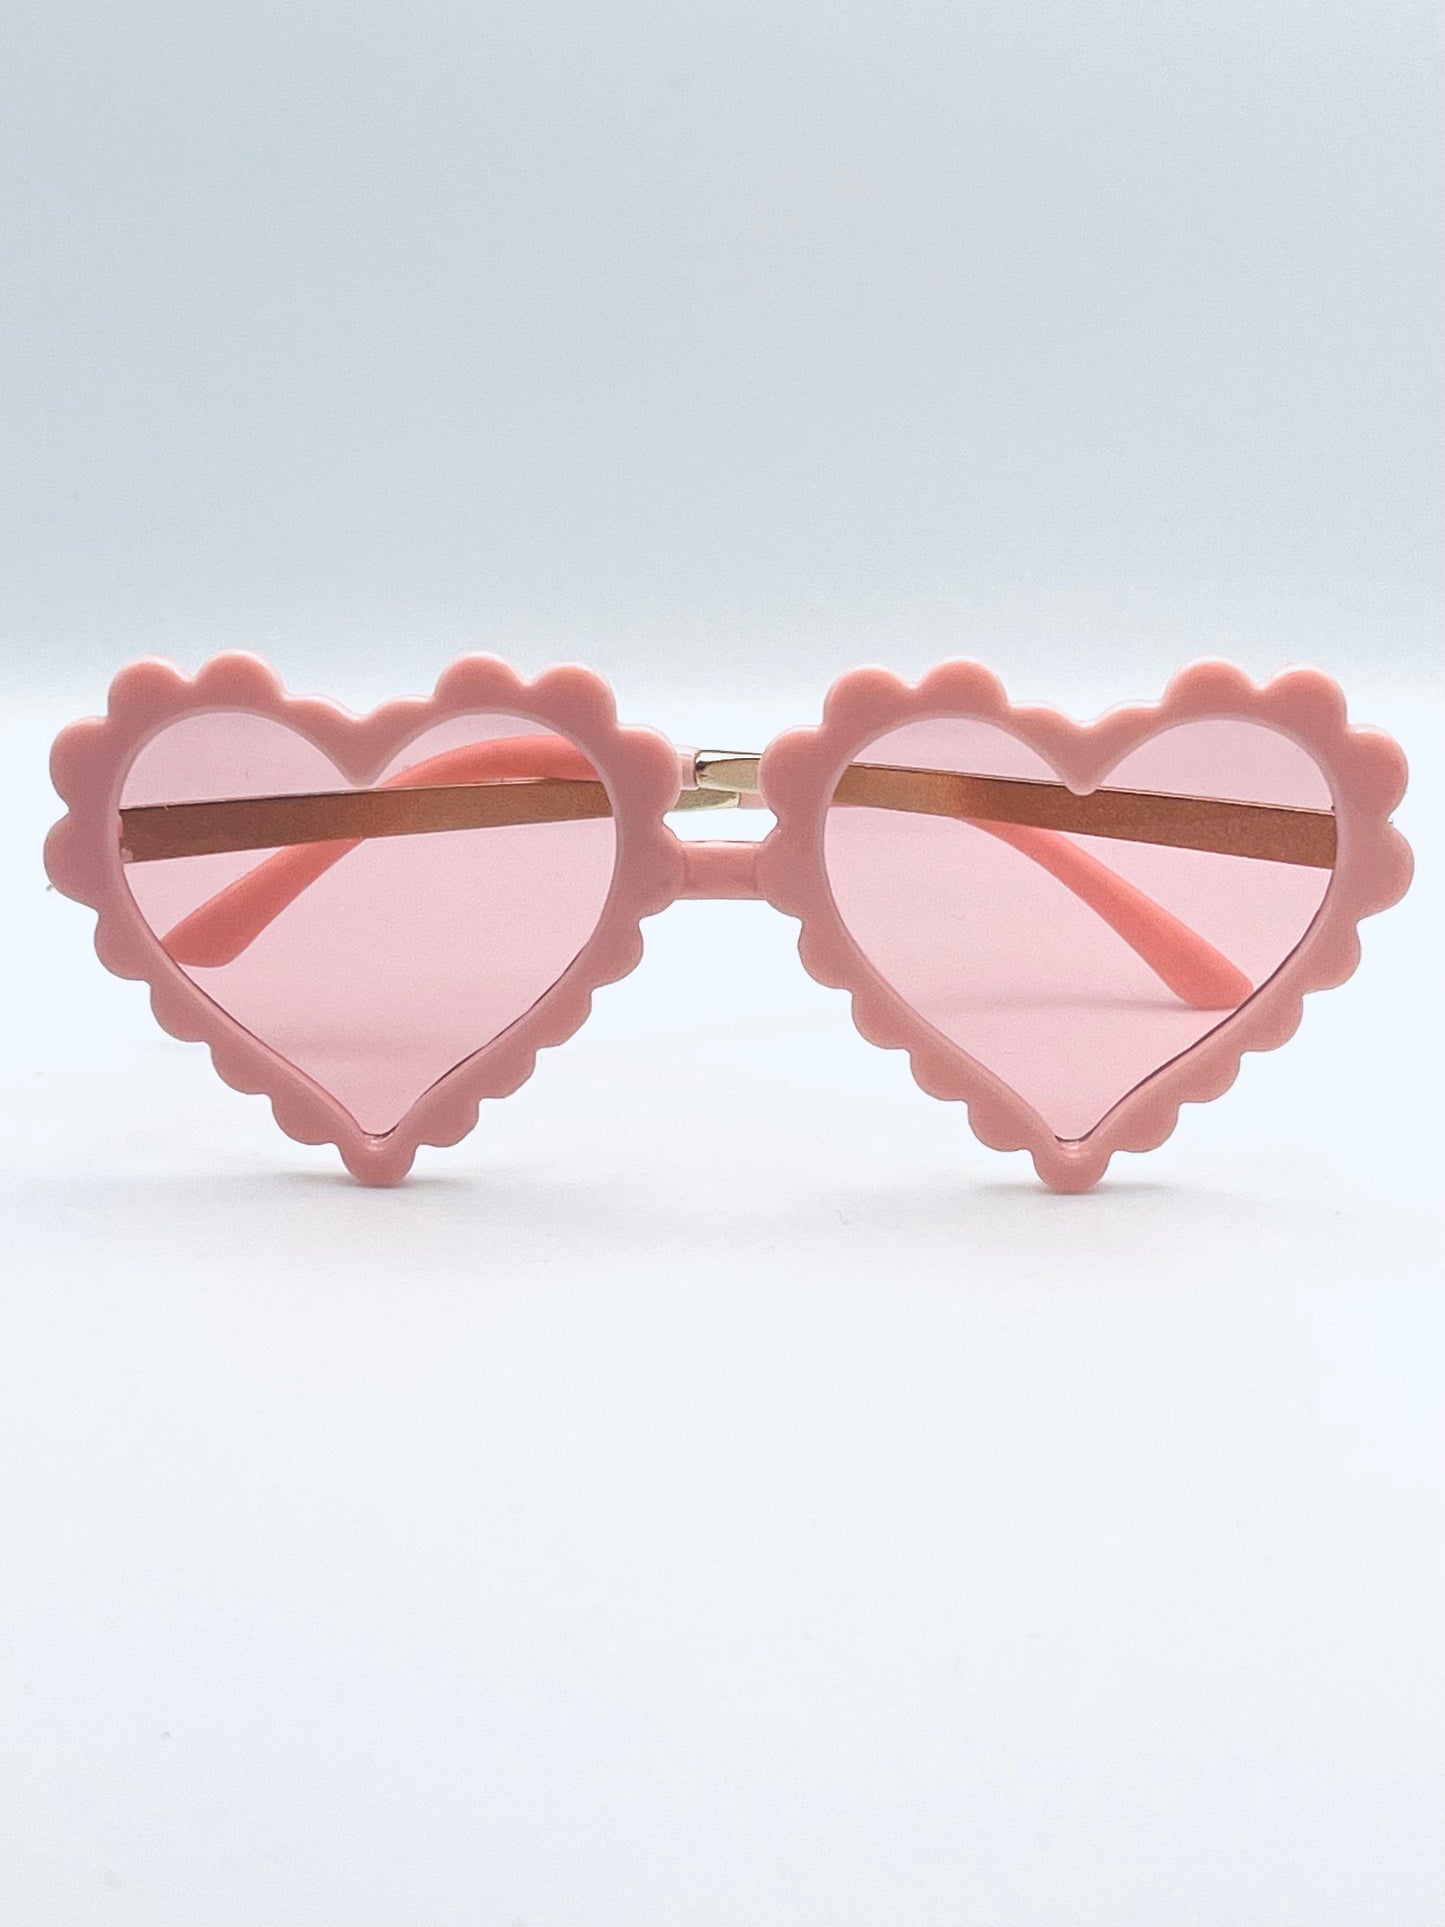 Fashionably, BBK! Accessories Girls Pink Heart Shaped Sunglasses